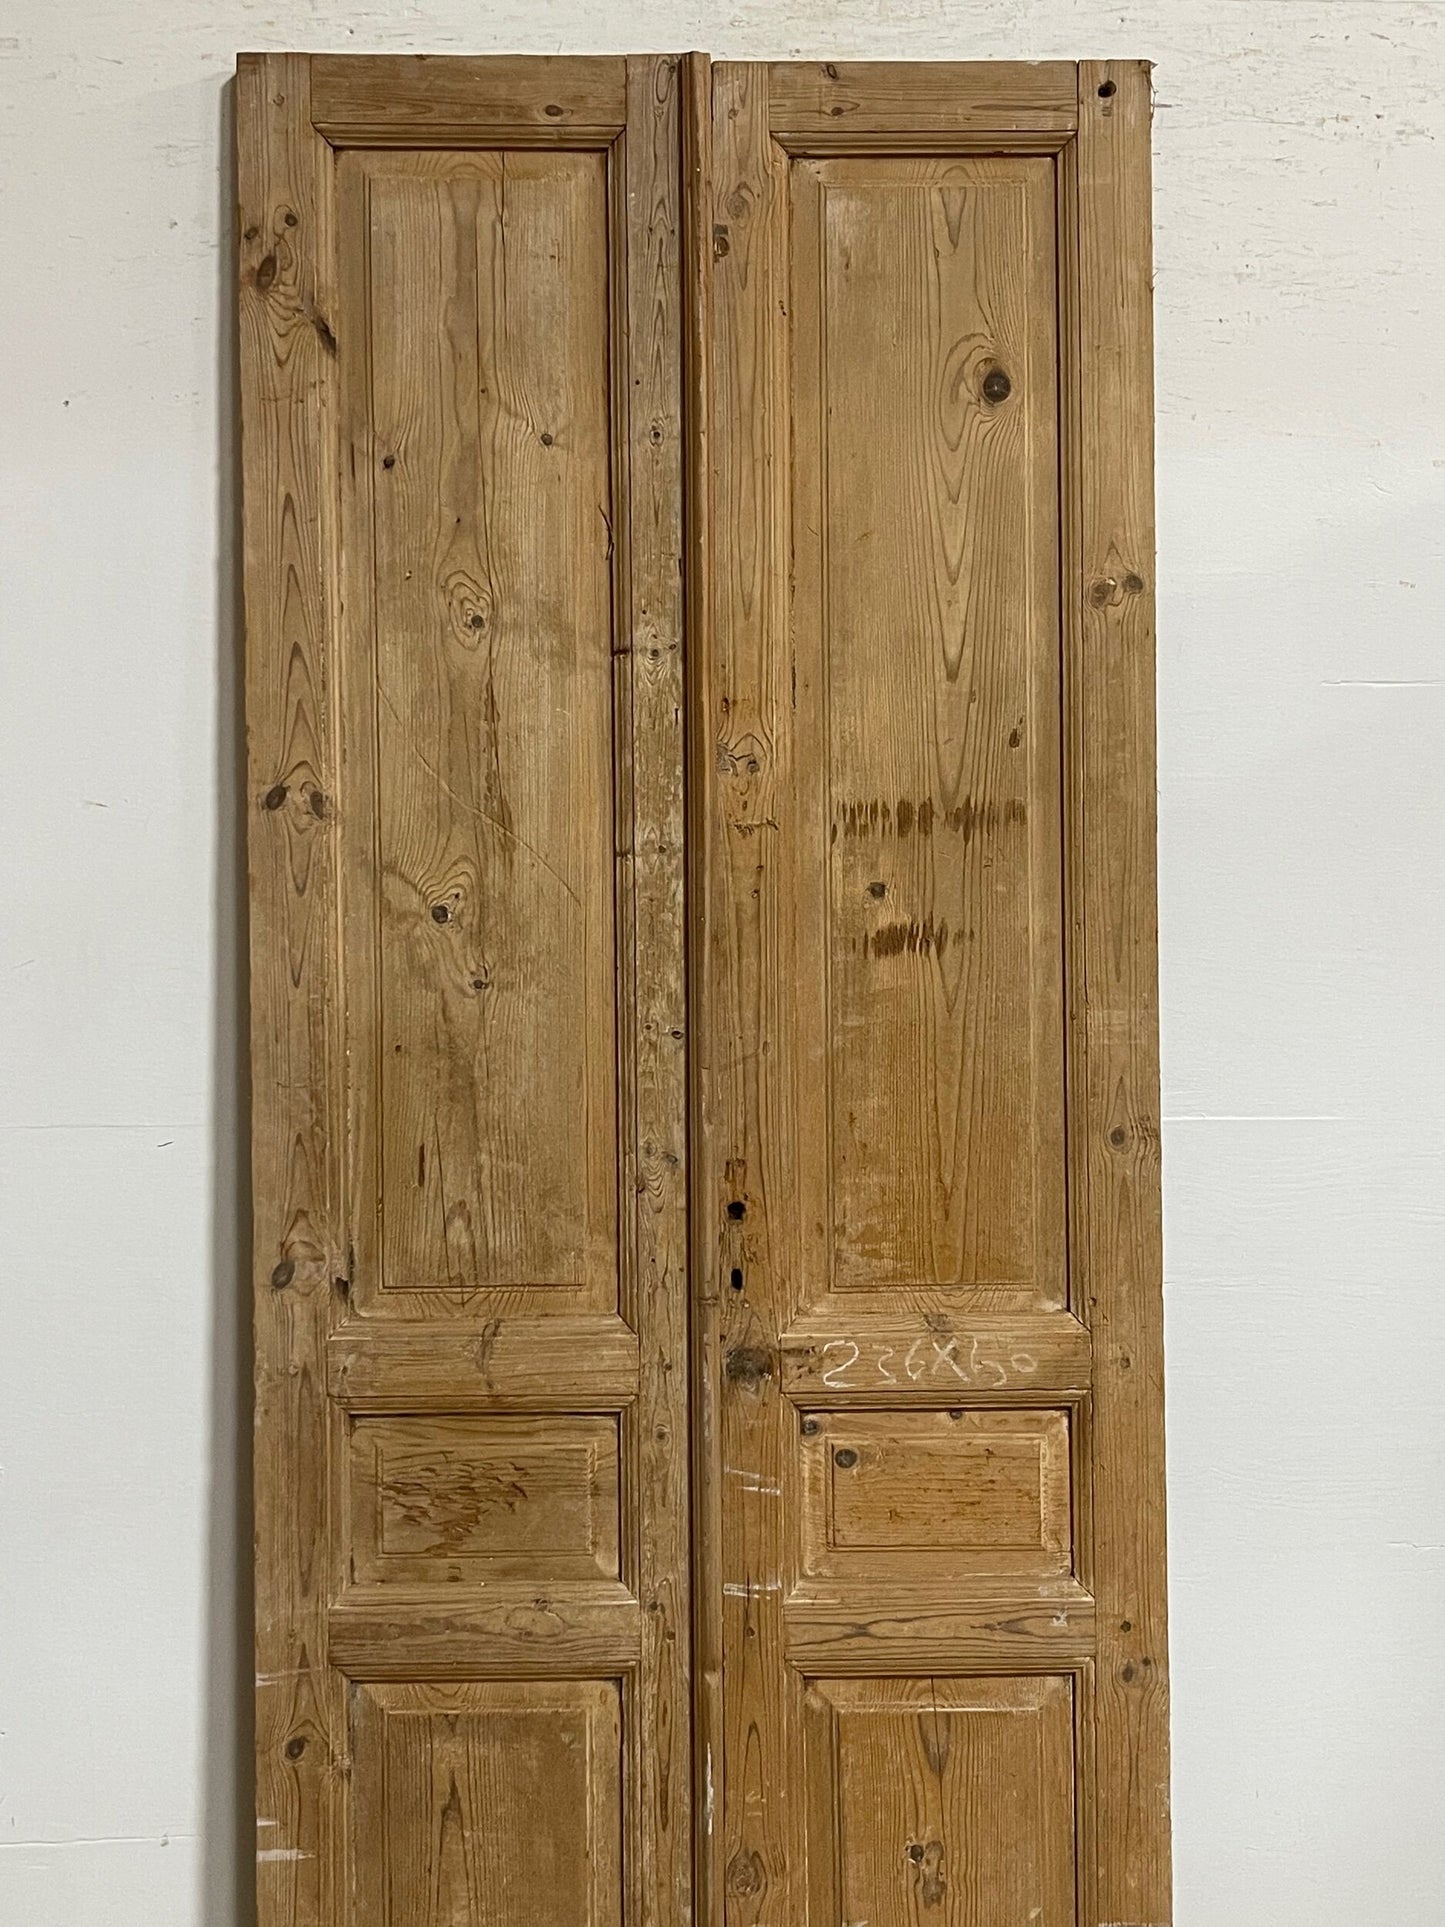 Antique French panel doors (93x38) I118